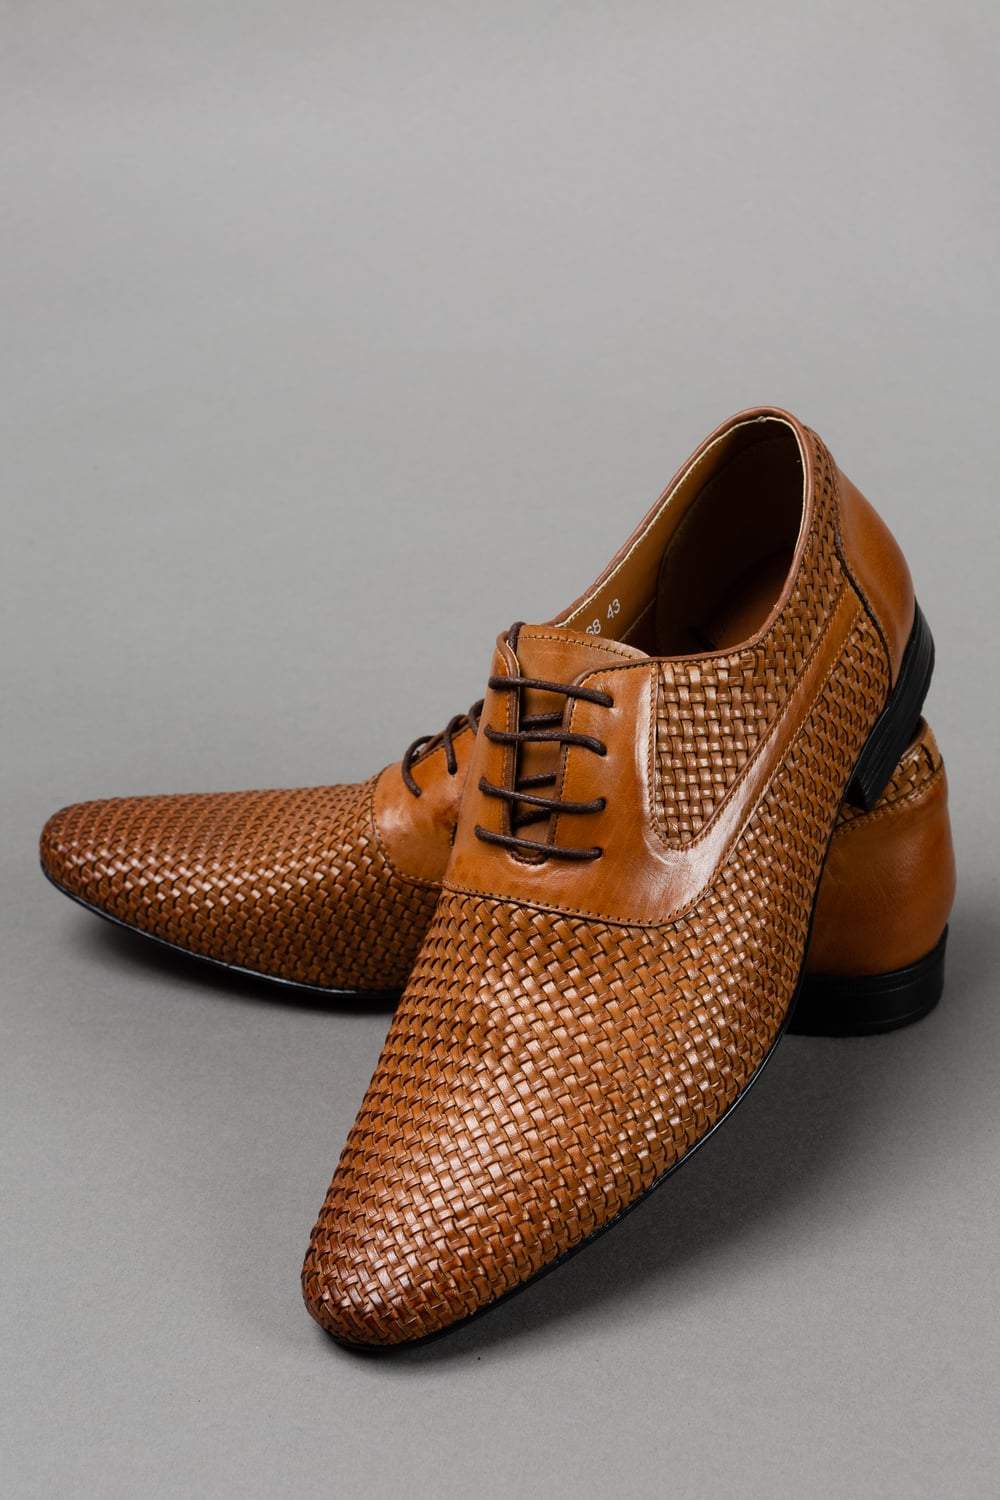 Woven  Tan Leather Shoe